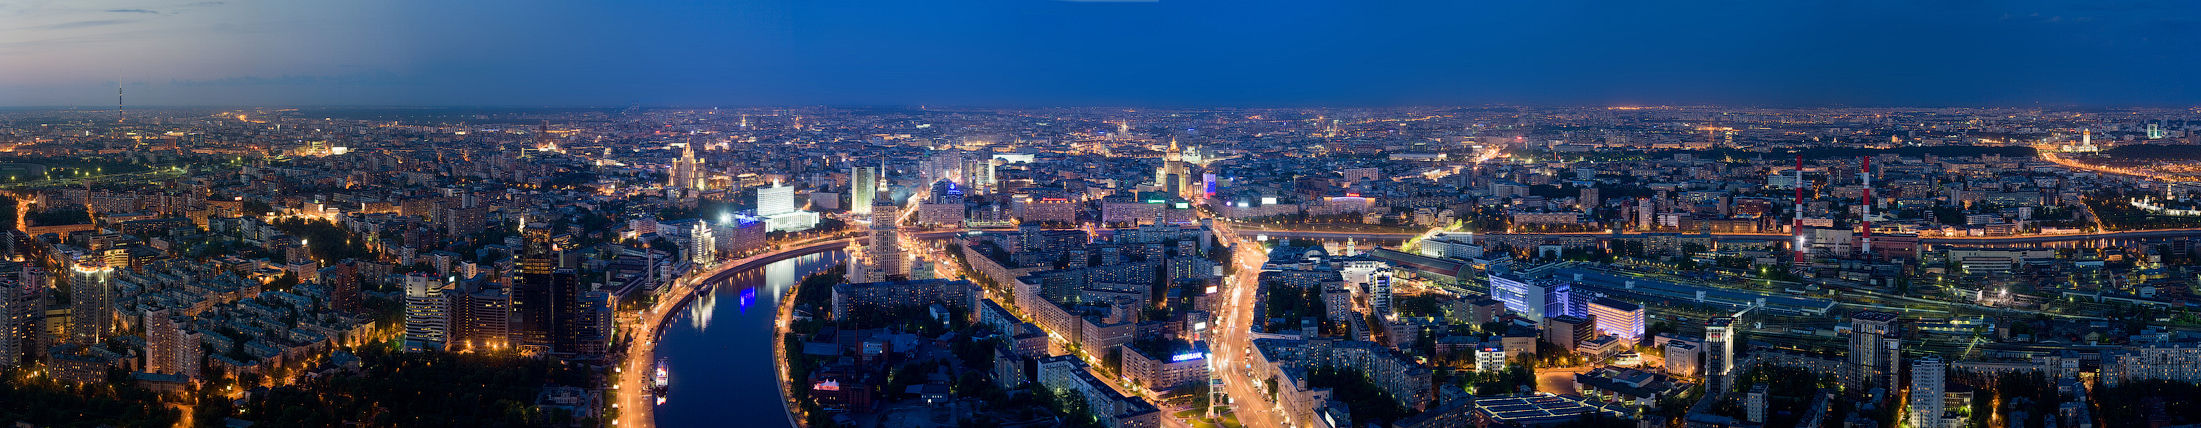 Ночная панорама со смотровой площадки Москва Сити